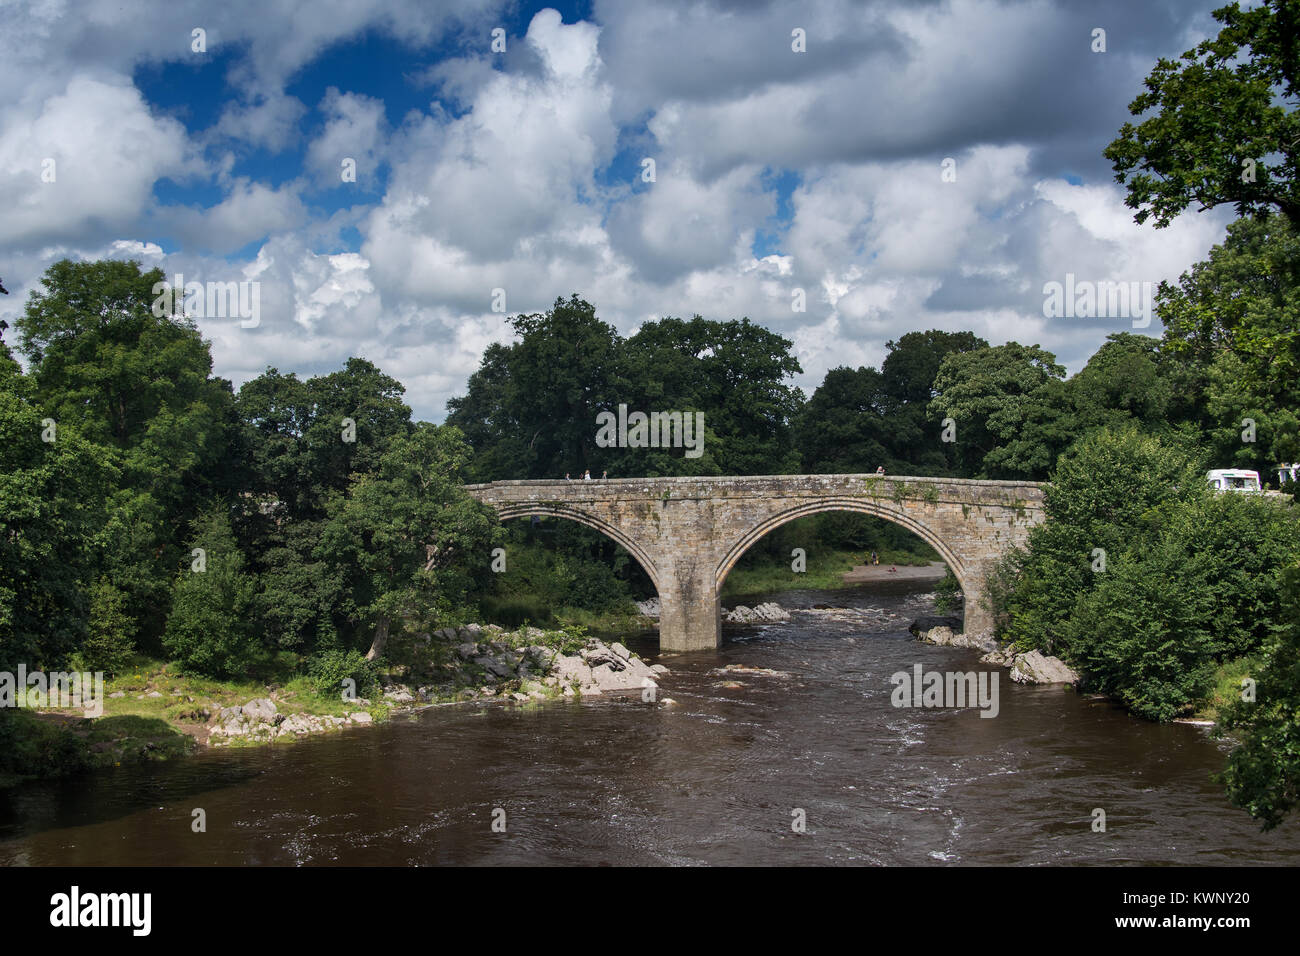 Devils Bridge Over The River Lune At Kirkby Lonsdale Cumbria Uk